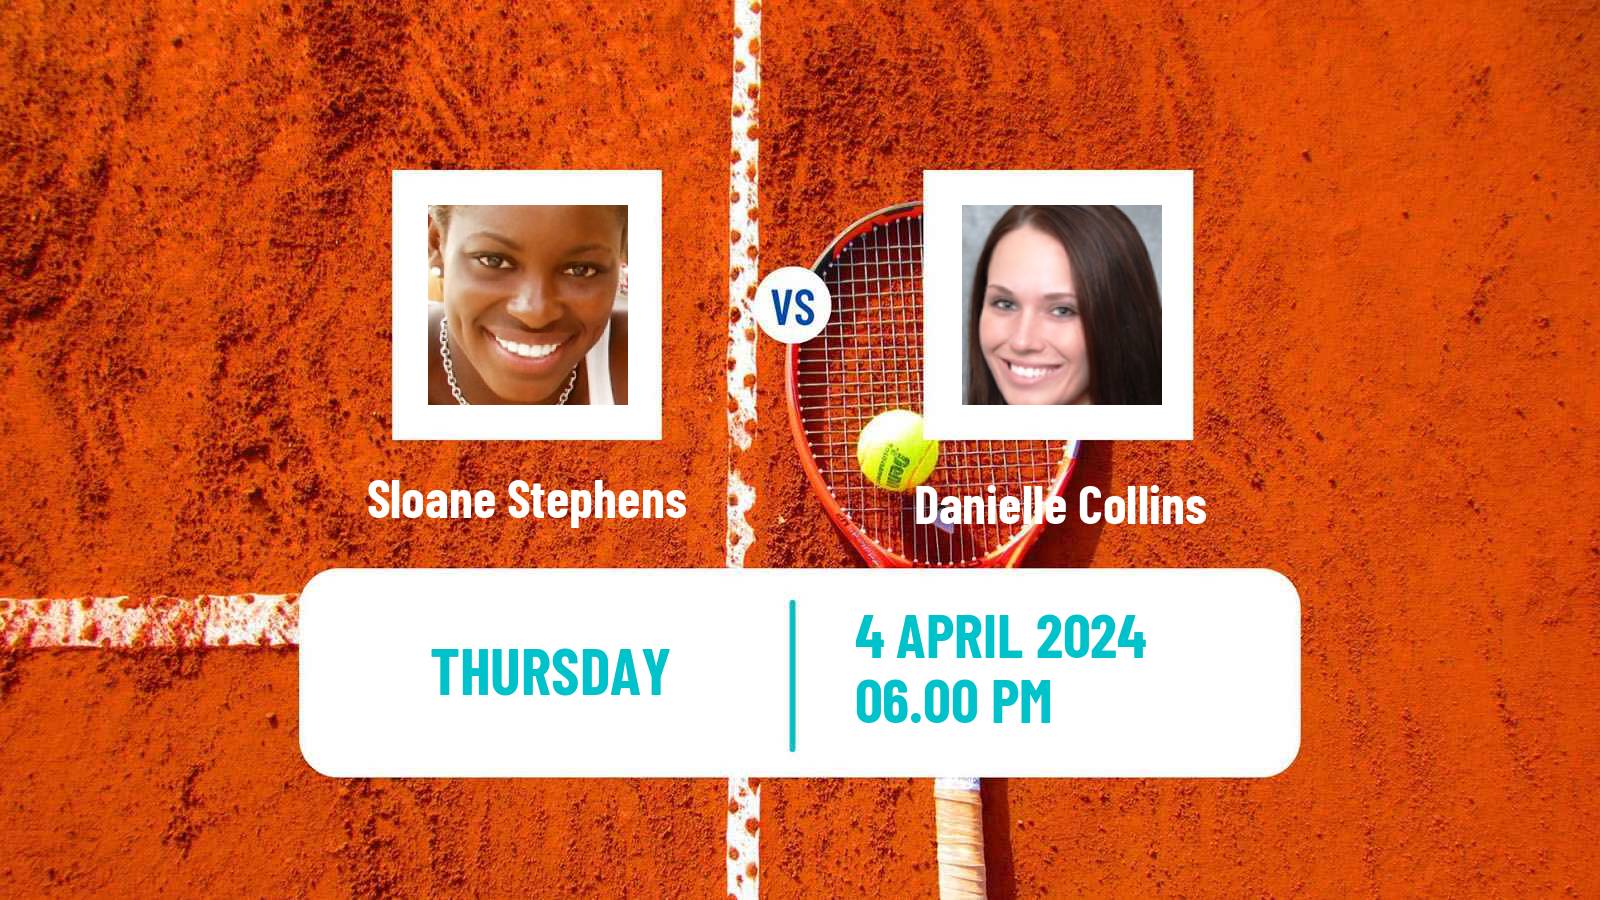 Tennis WTA Charleston Sloane Stephens - Danielle Collins